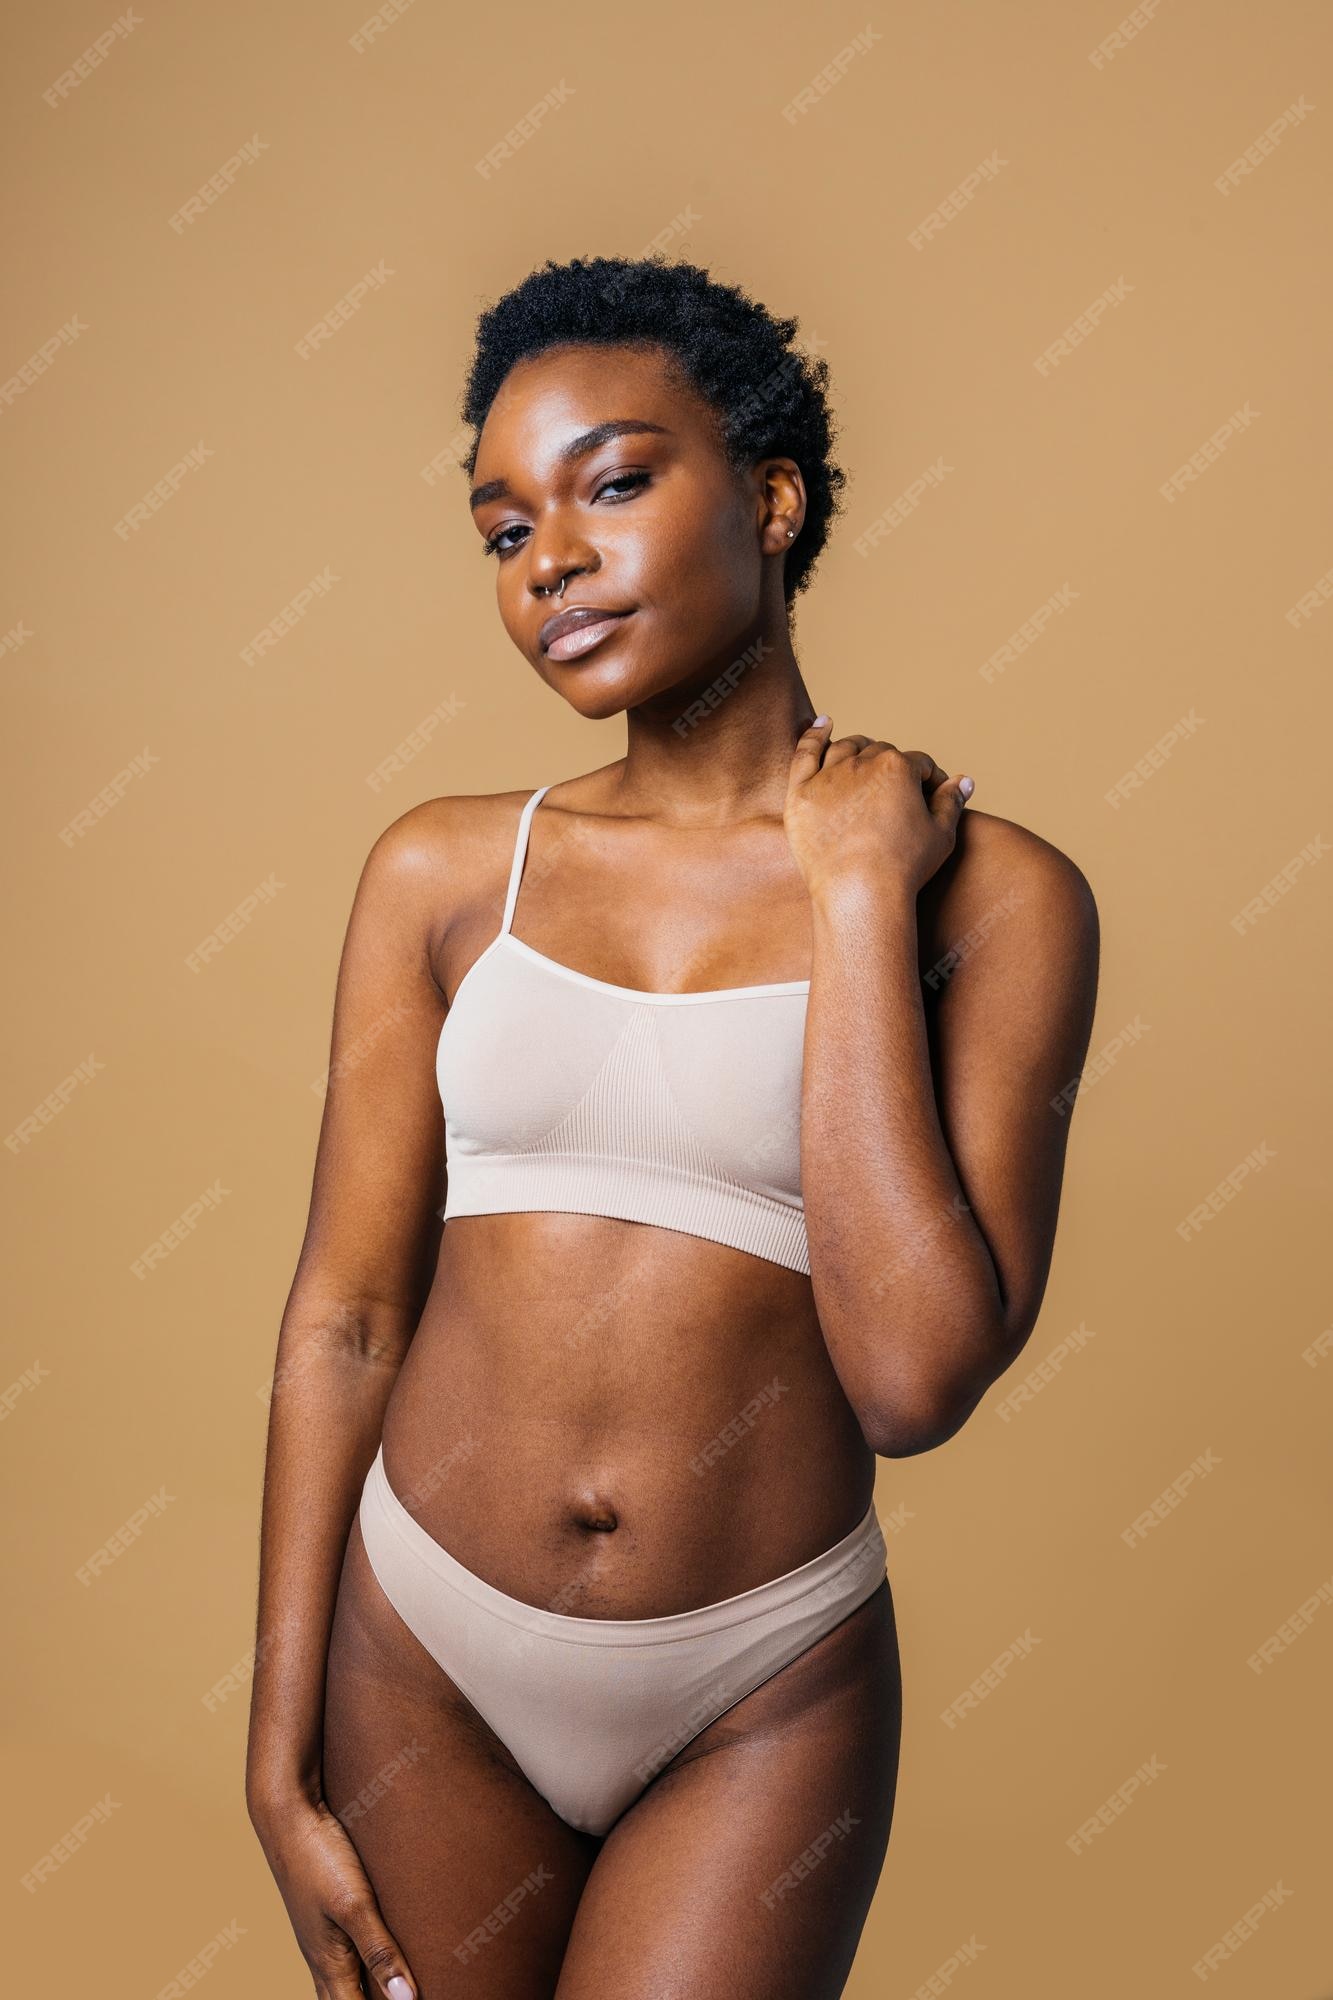 daryl norman share beautiful black women in panties photos